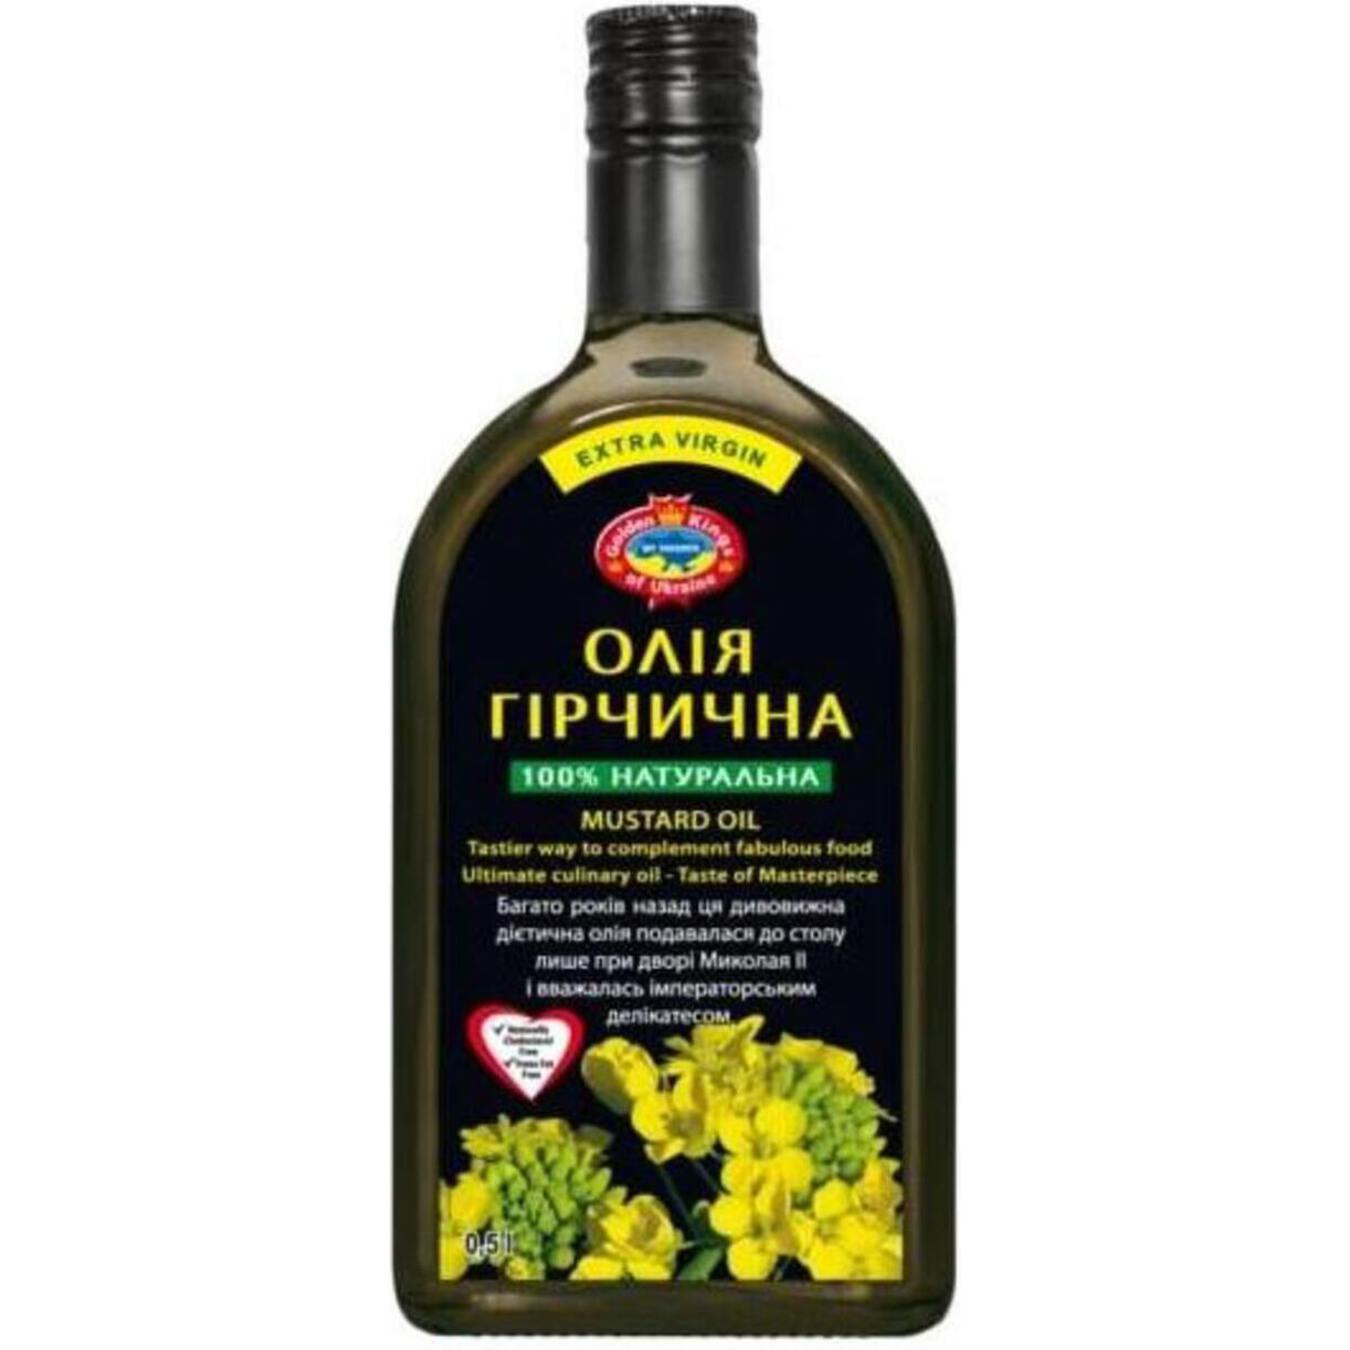 Golden Kings of Ukraine Extra Virgin Mustard Oil 500ml 2